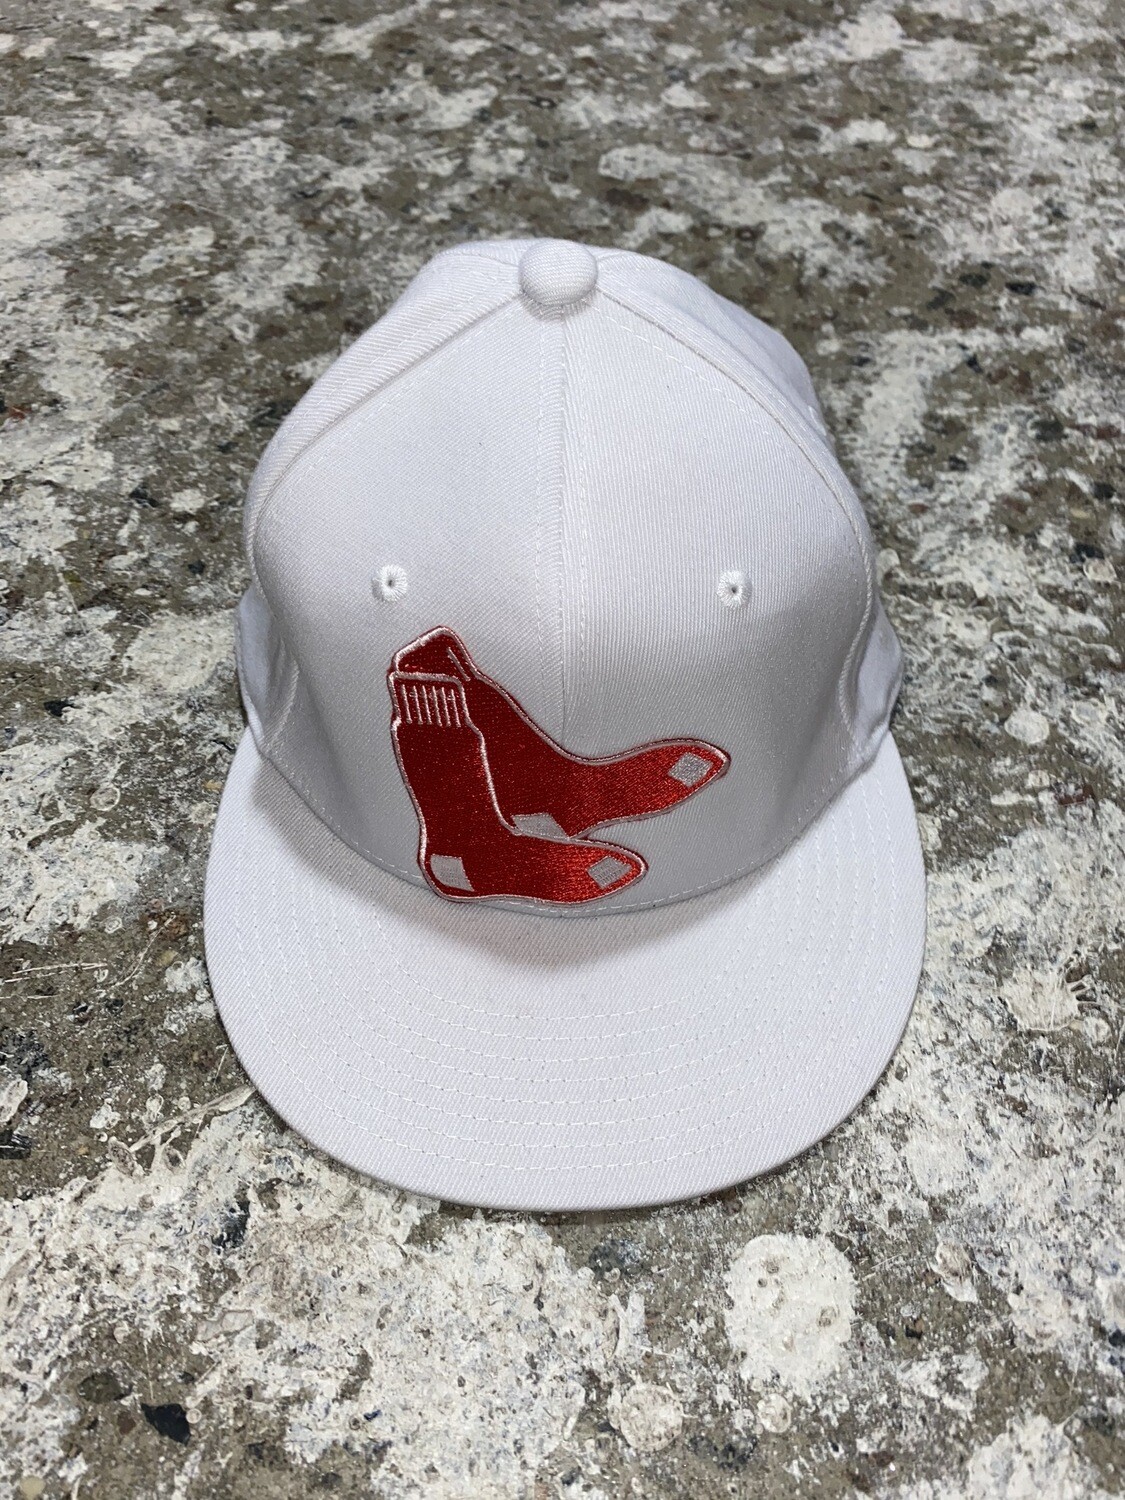 Men’s Red Sox Logo Ball Cap